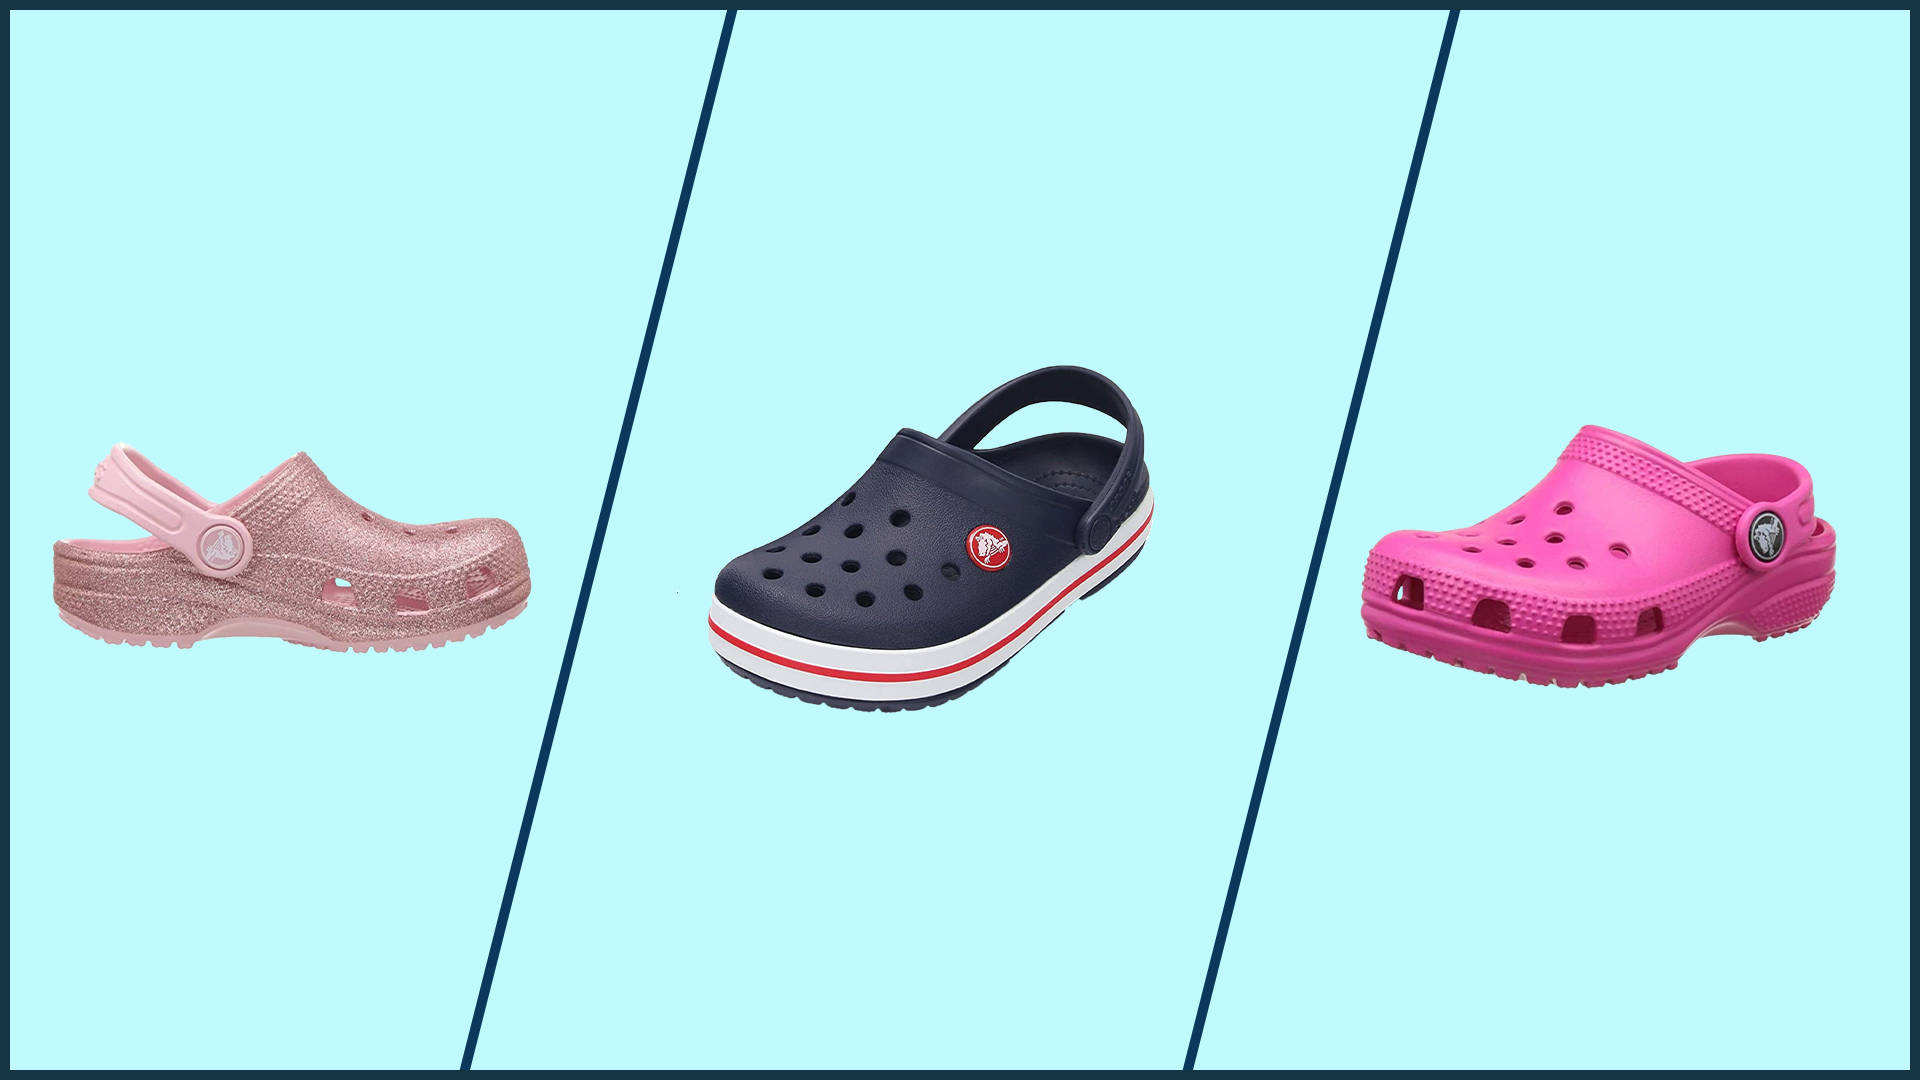 Iconic Crocs Sandals Background